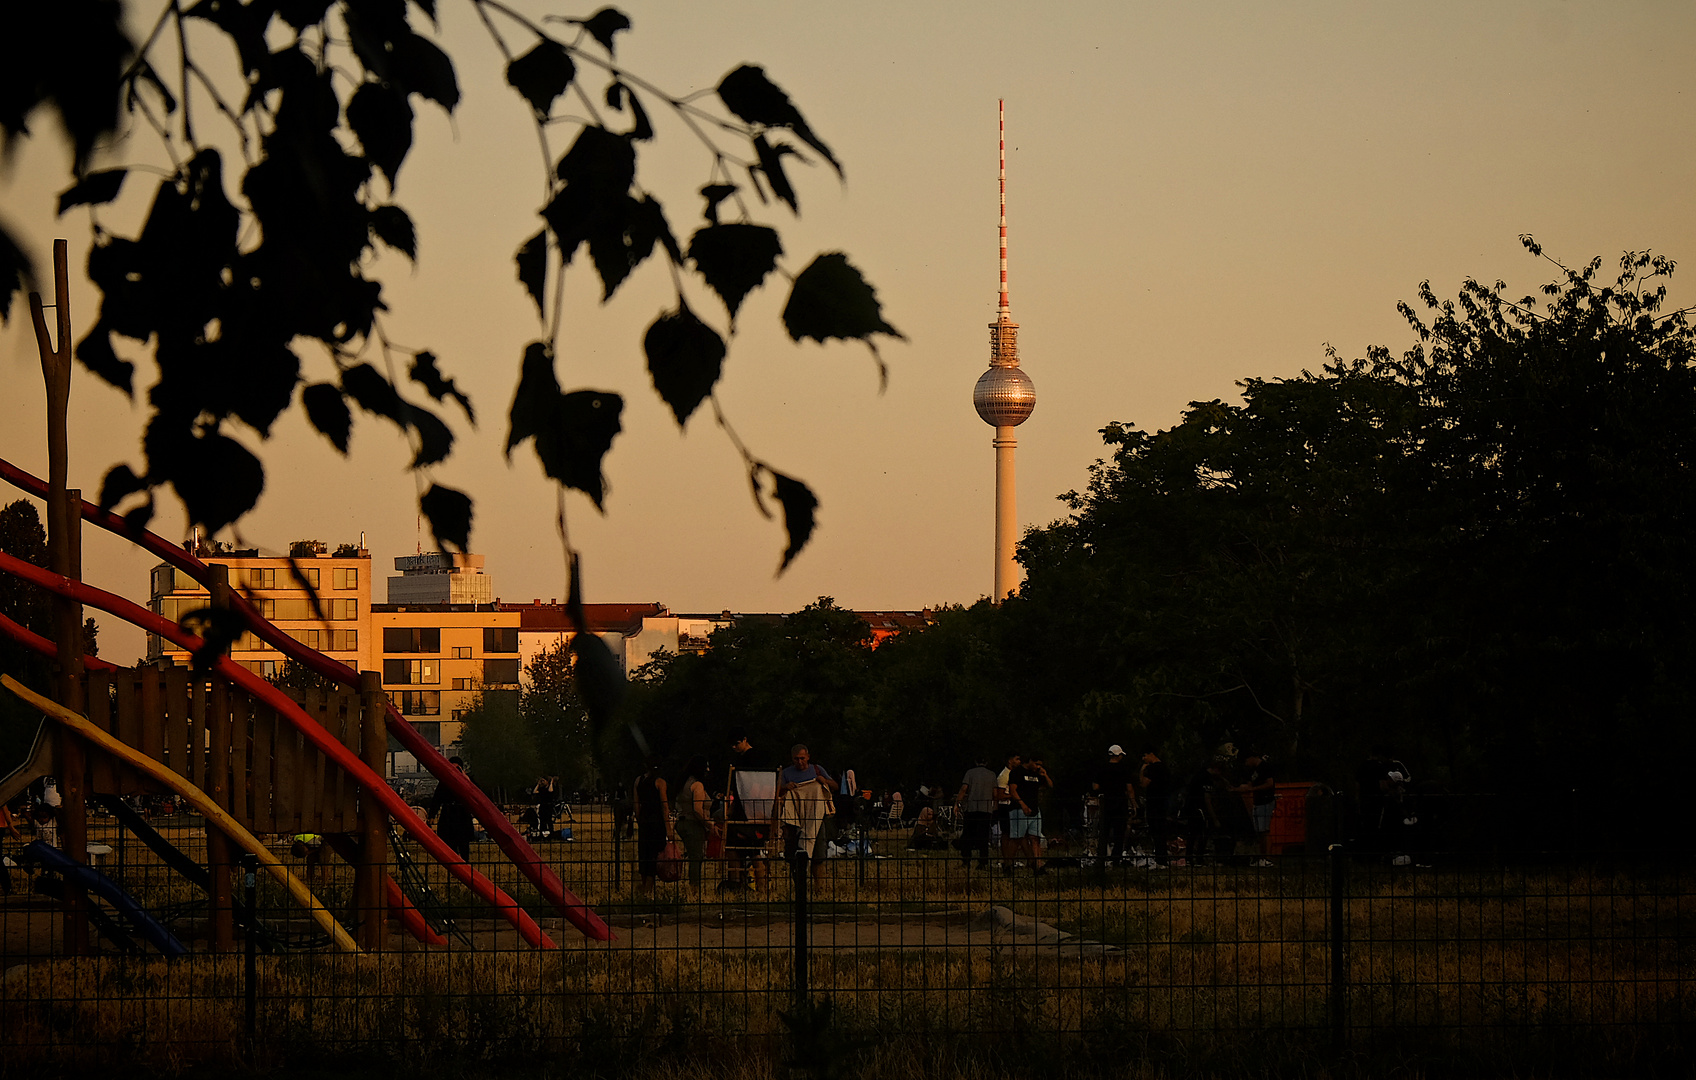 Goodnight Berlin...